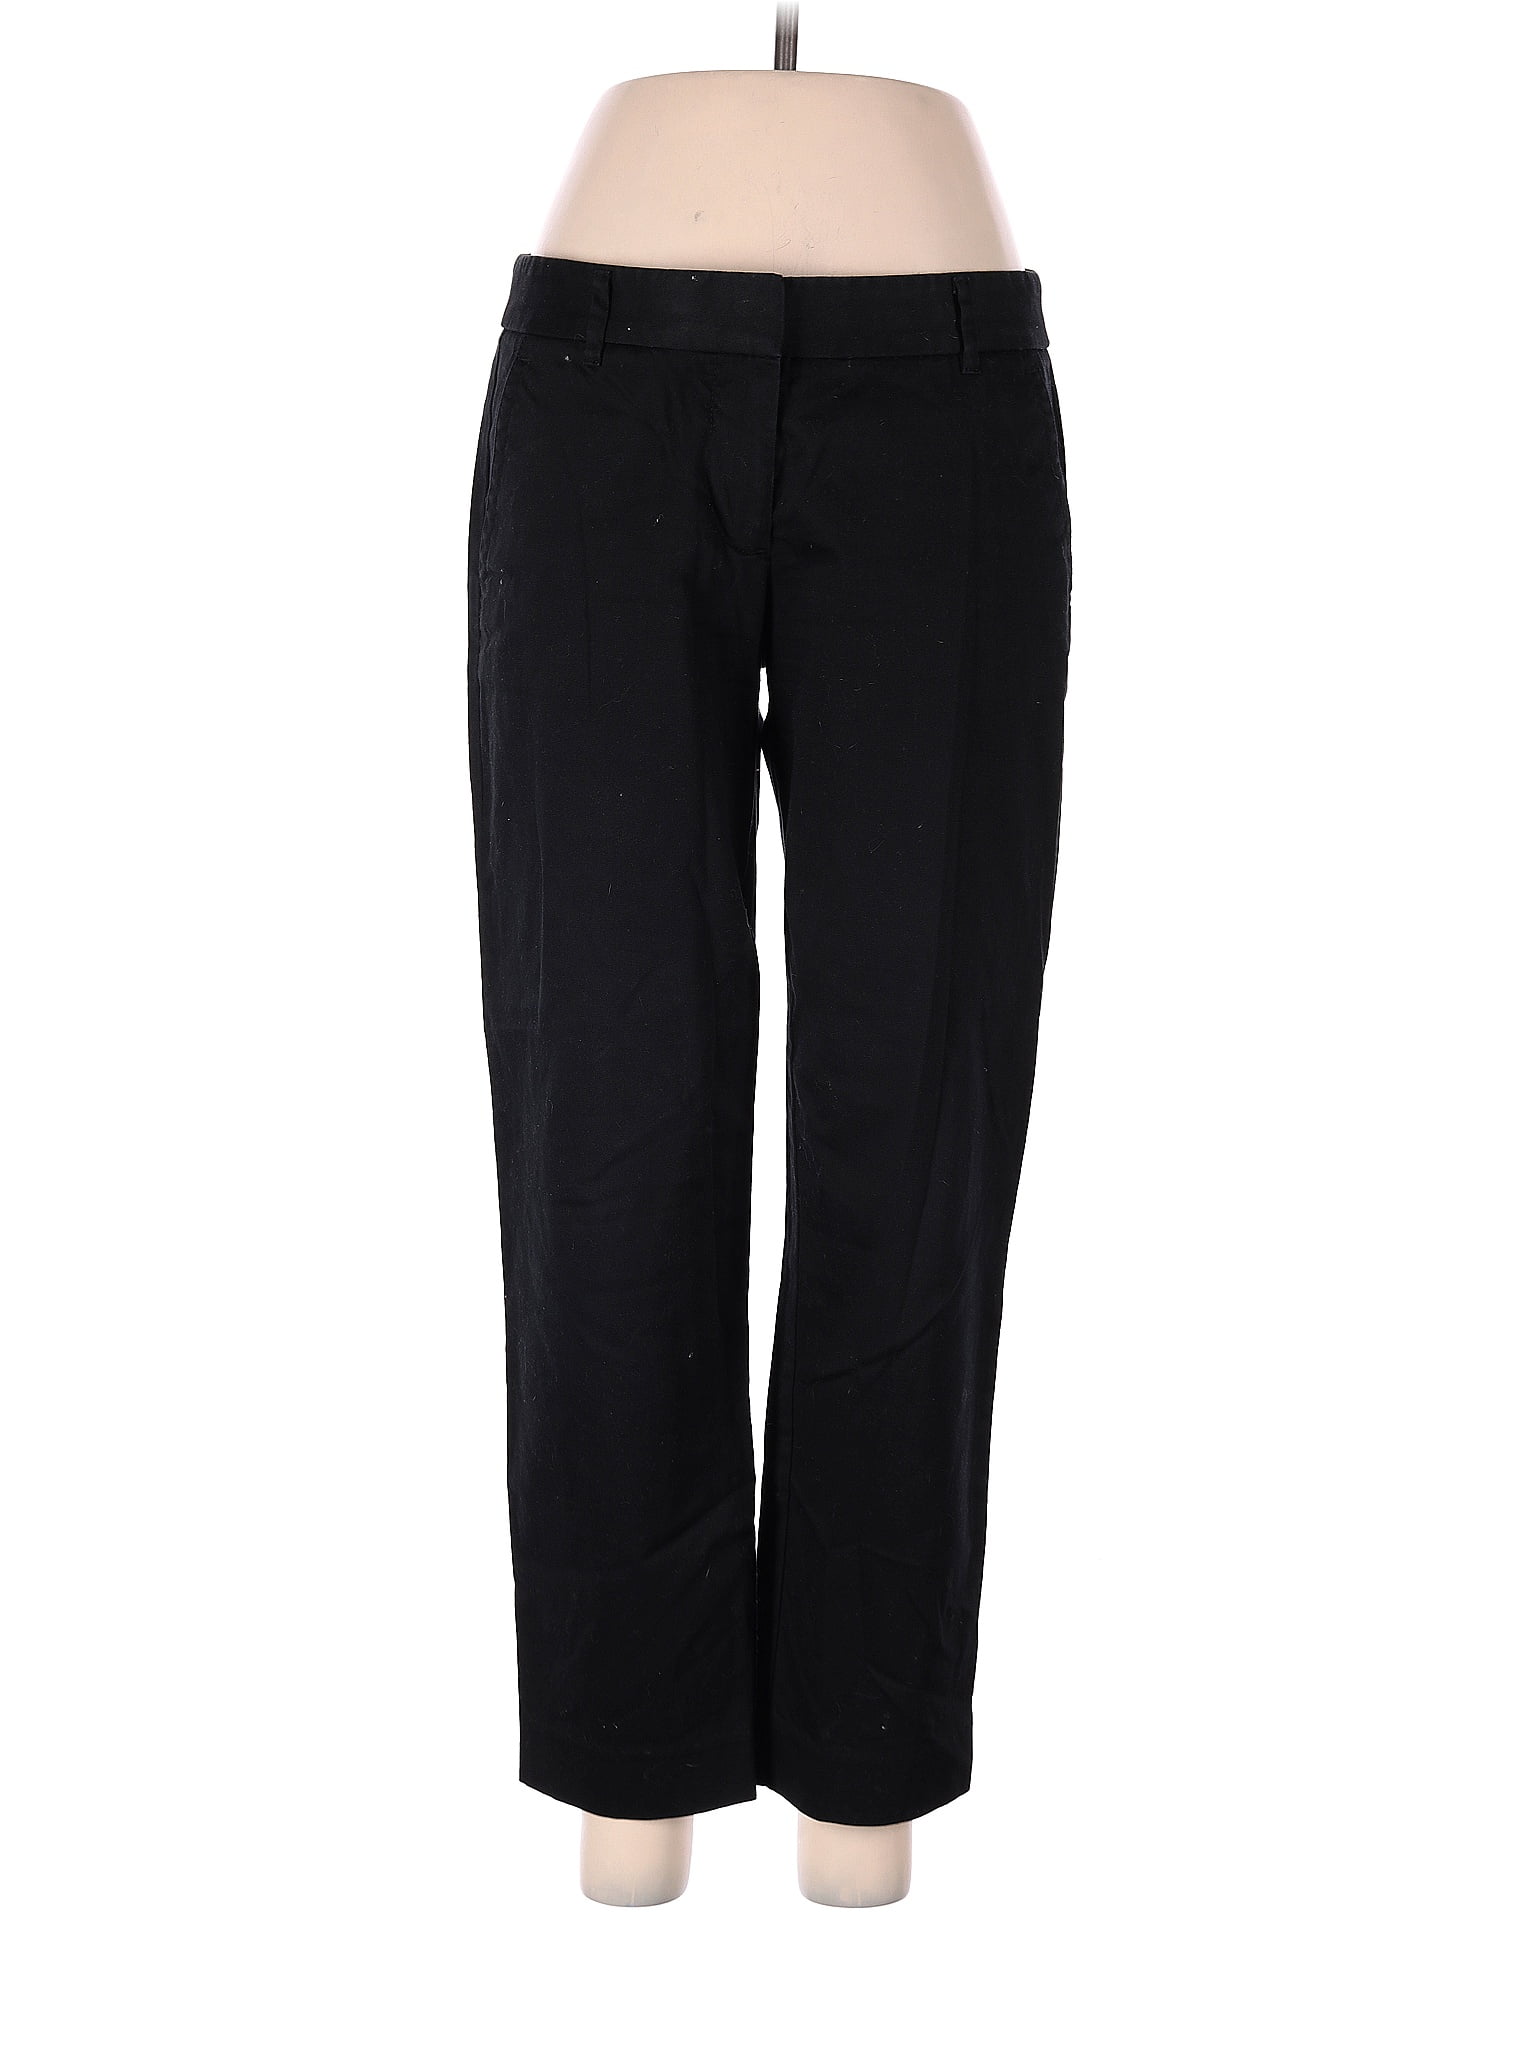 J.Crew Factory Store Polka Dots Black Dress Pants Size 4 - 77% off ...